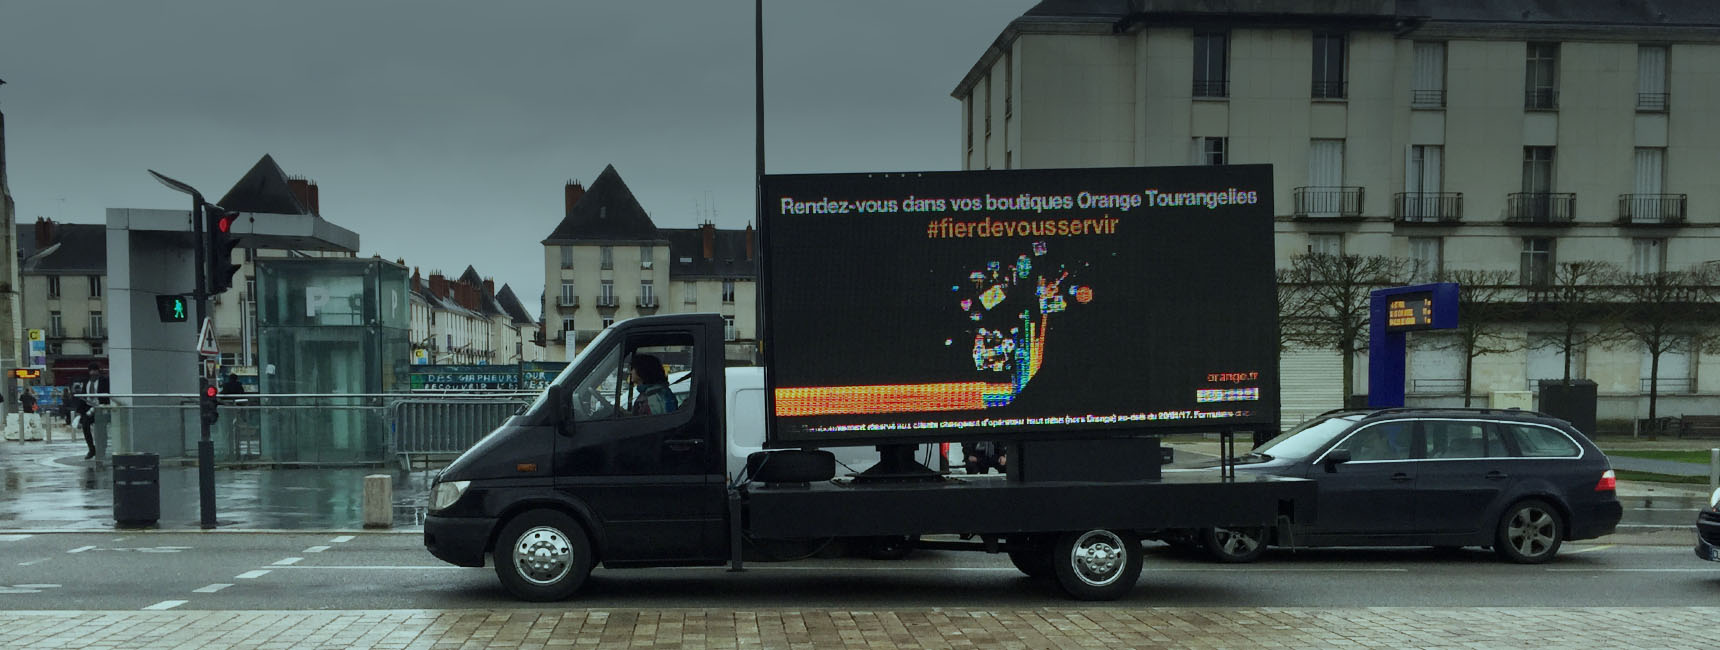 Dispositifs d'affichage mobile - Keemia Strasbourg Agence marketing local en région Grand-Est